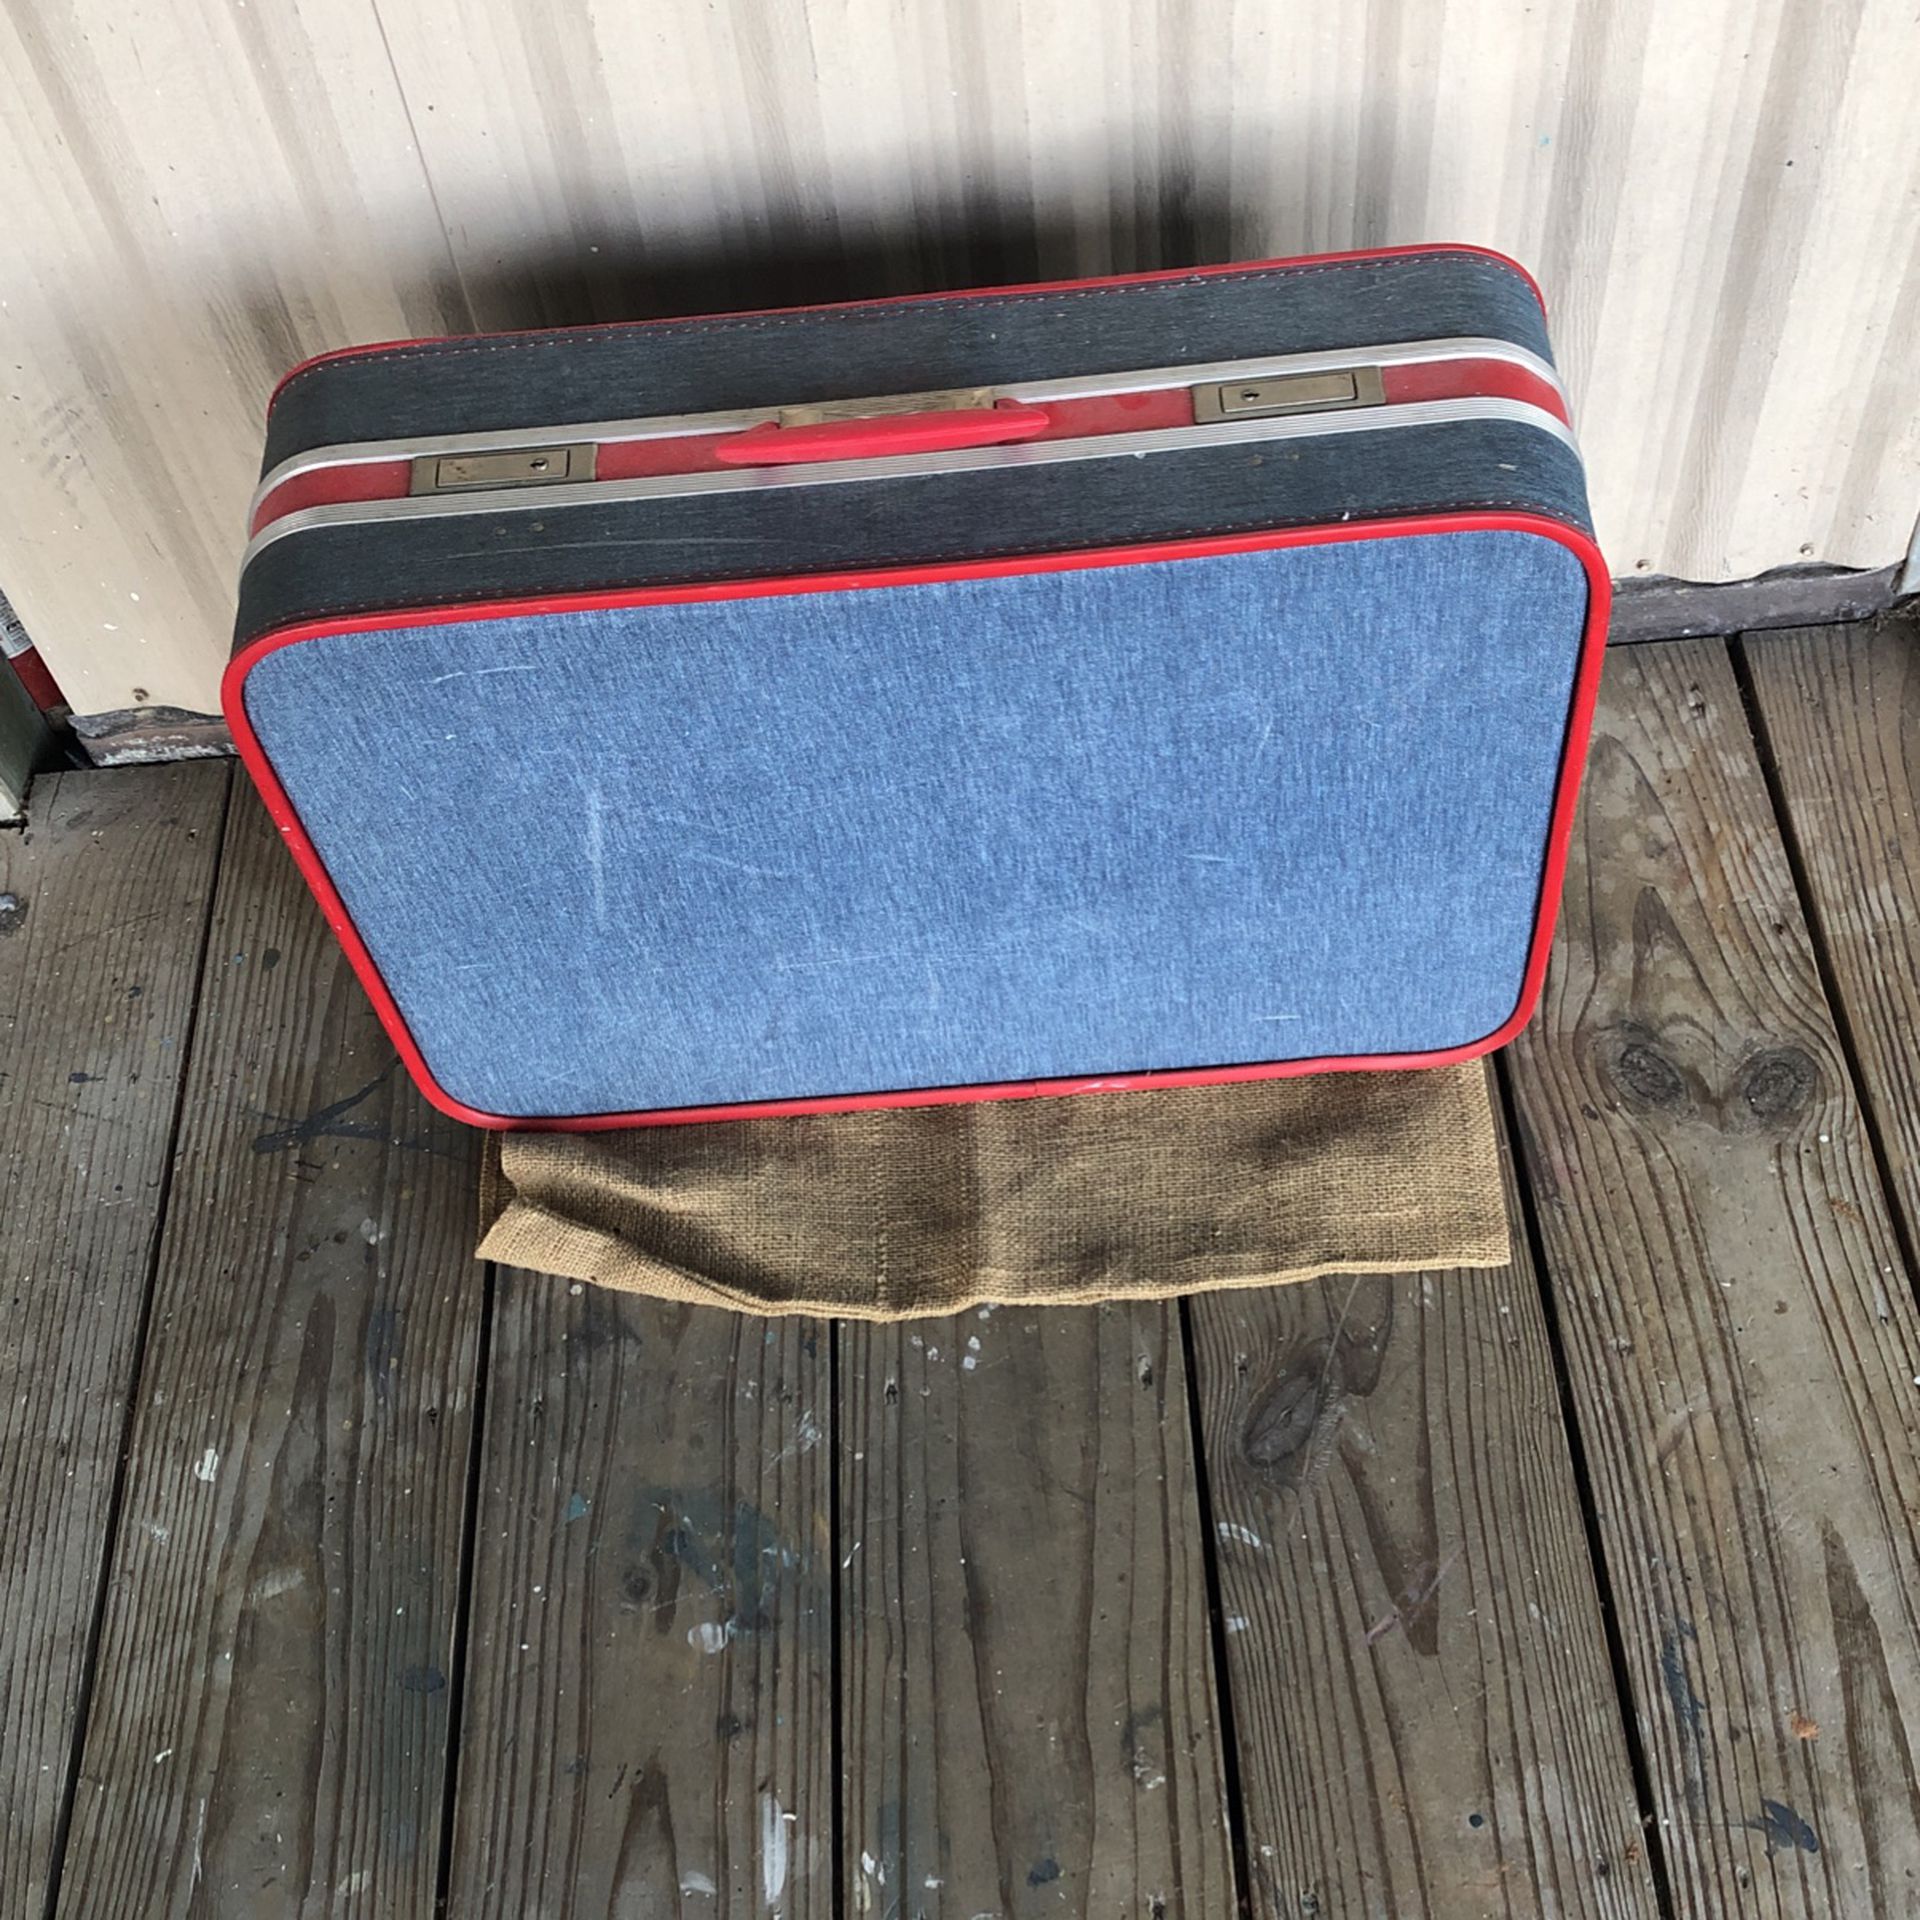  Vintage Denim Old Business Suitcase Luggage 